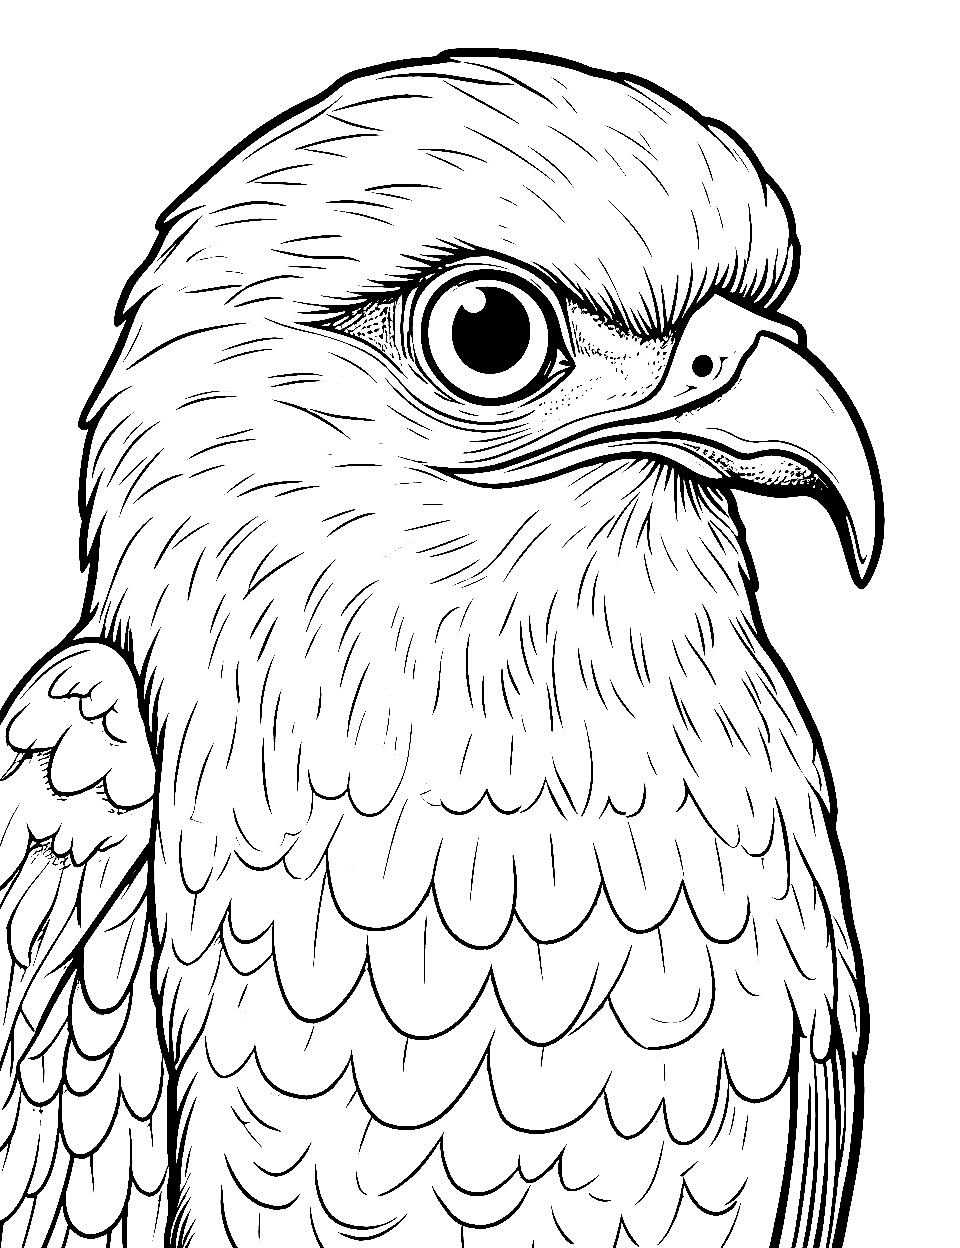 Falcon's Piercing Gaze Coloring Page - A close-up of a falcon’s intense eyes.